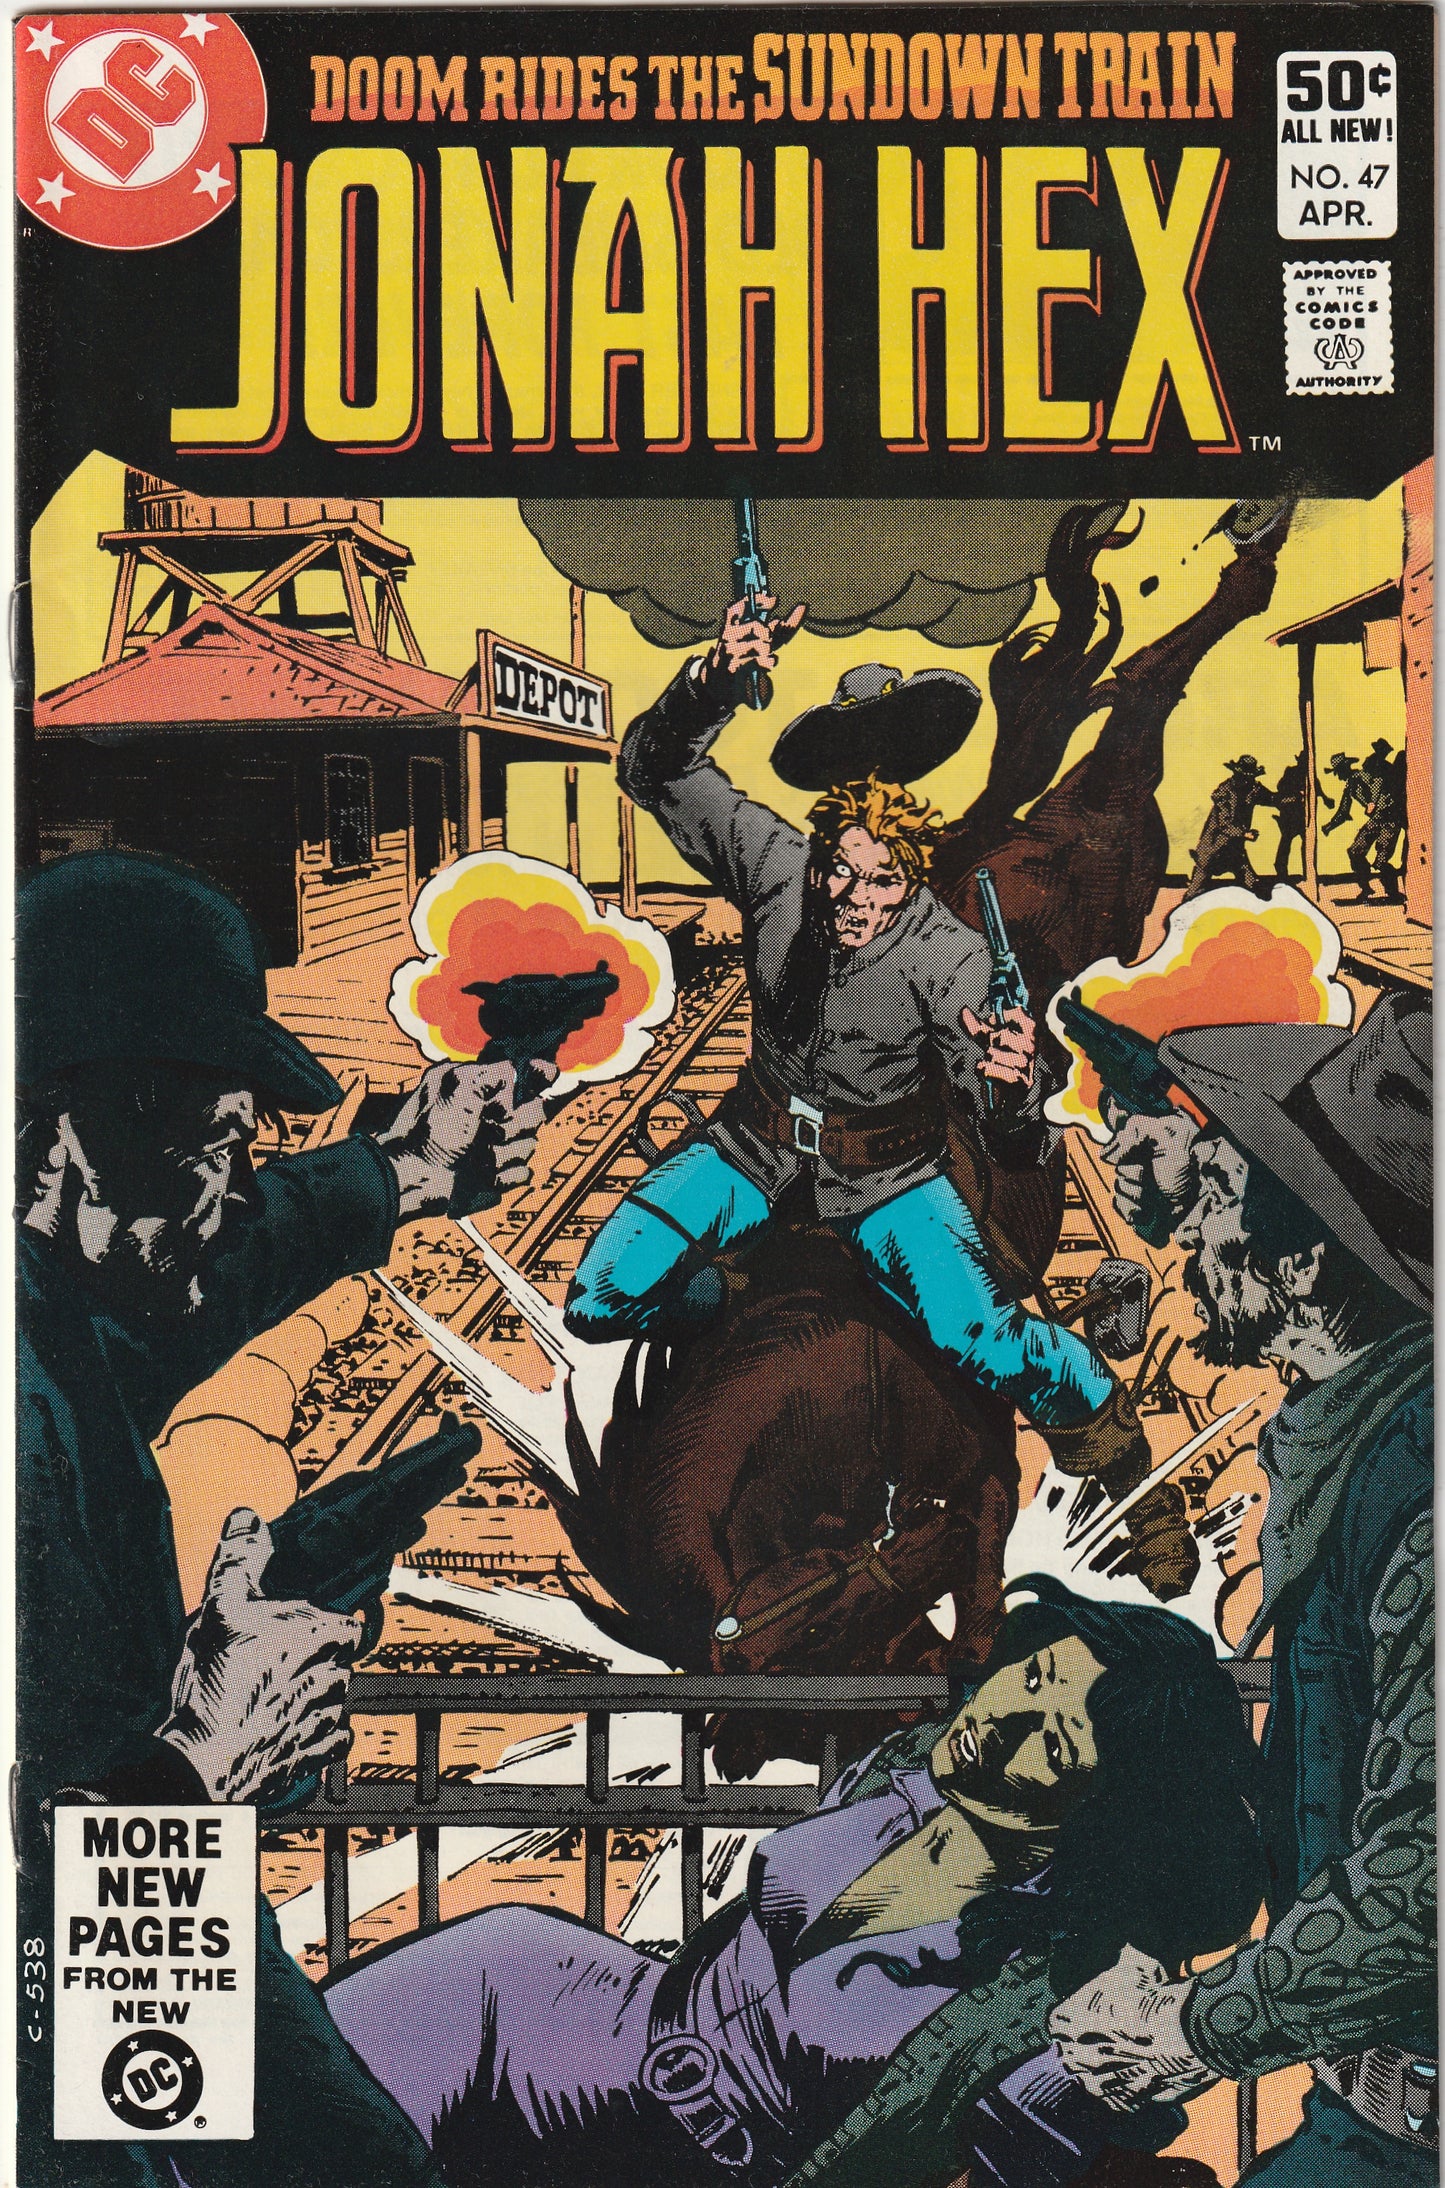 Jonah Hex #47 (1981)